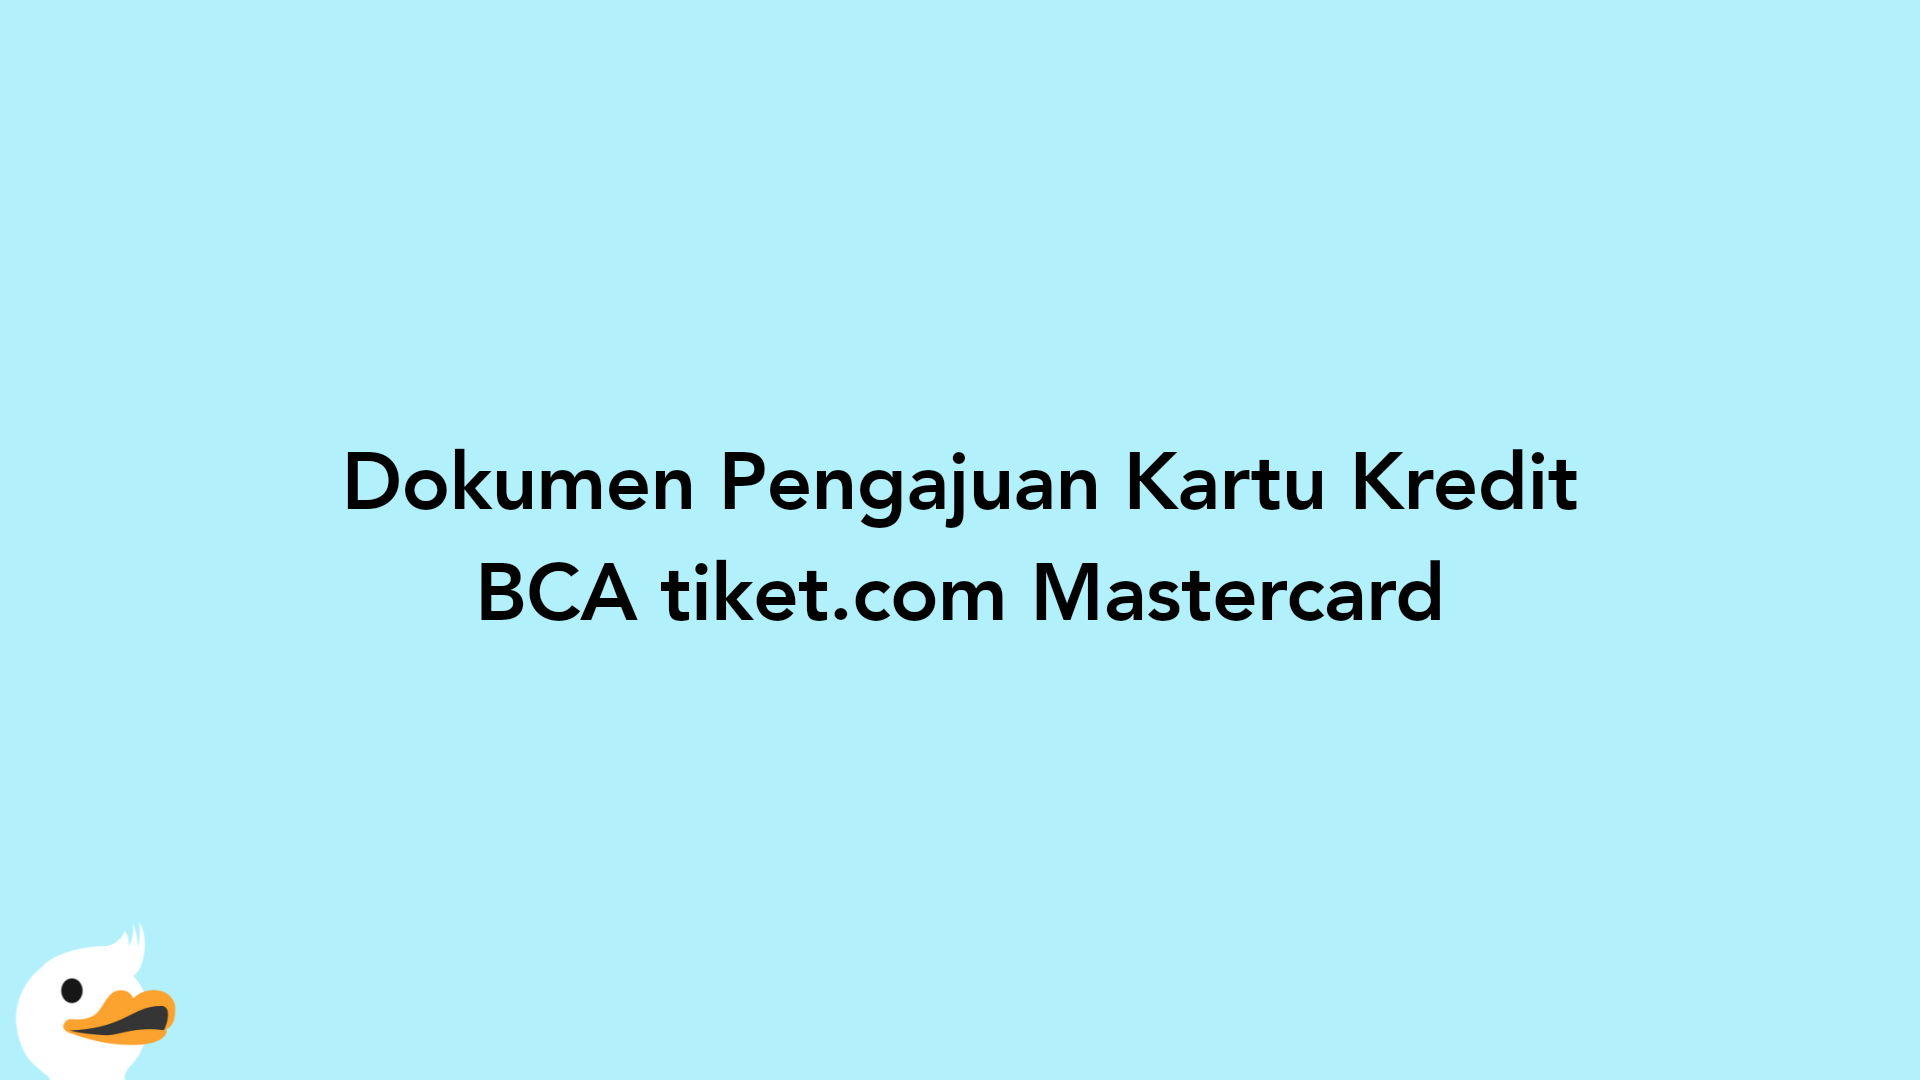 Dokumen Pengajuan Kartu Kredit BCA tiket.com Mastercard